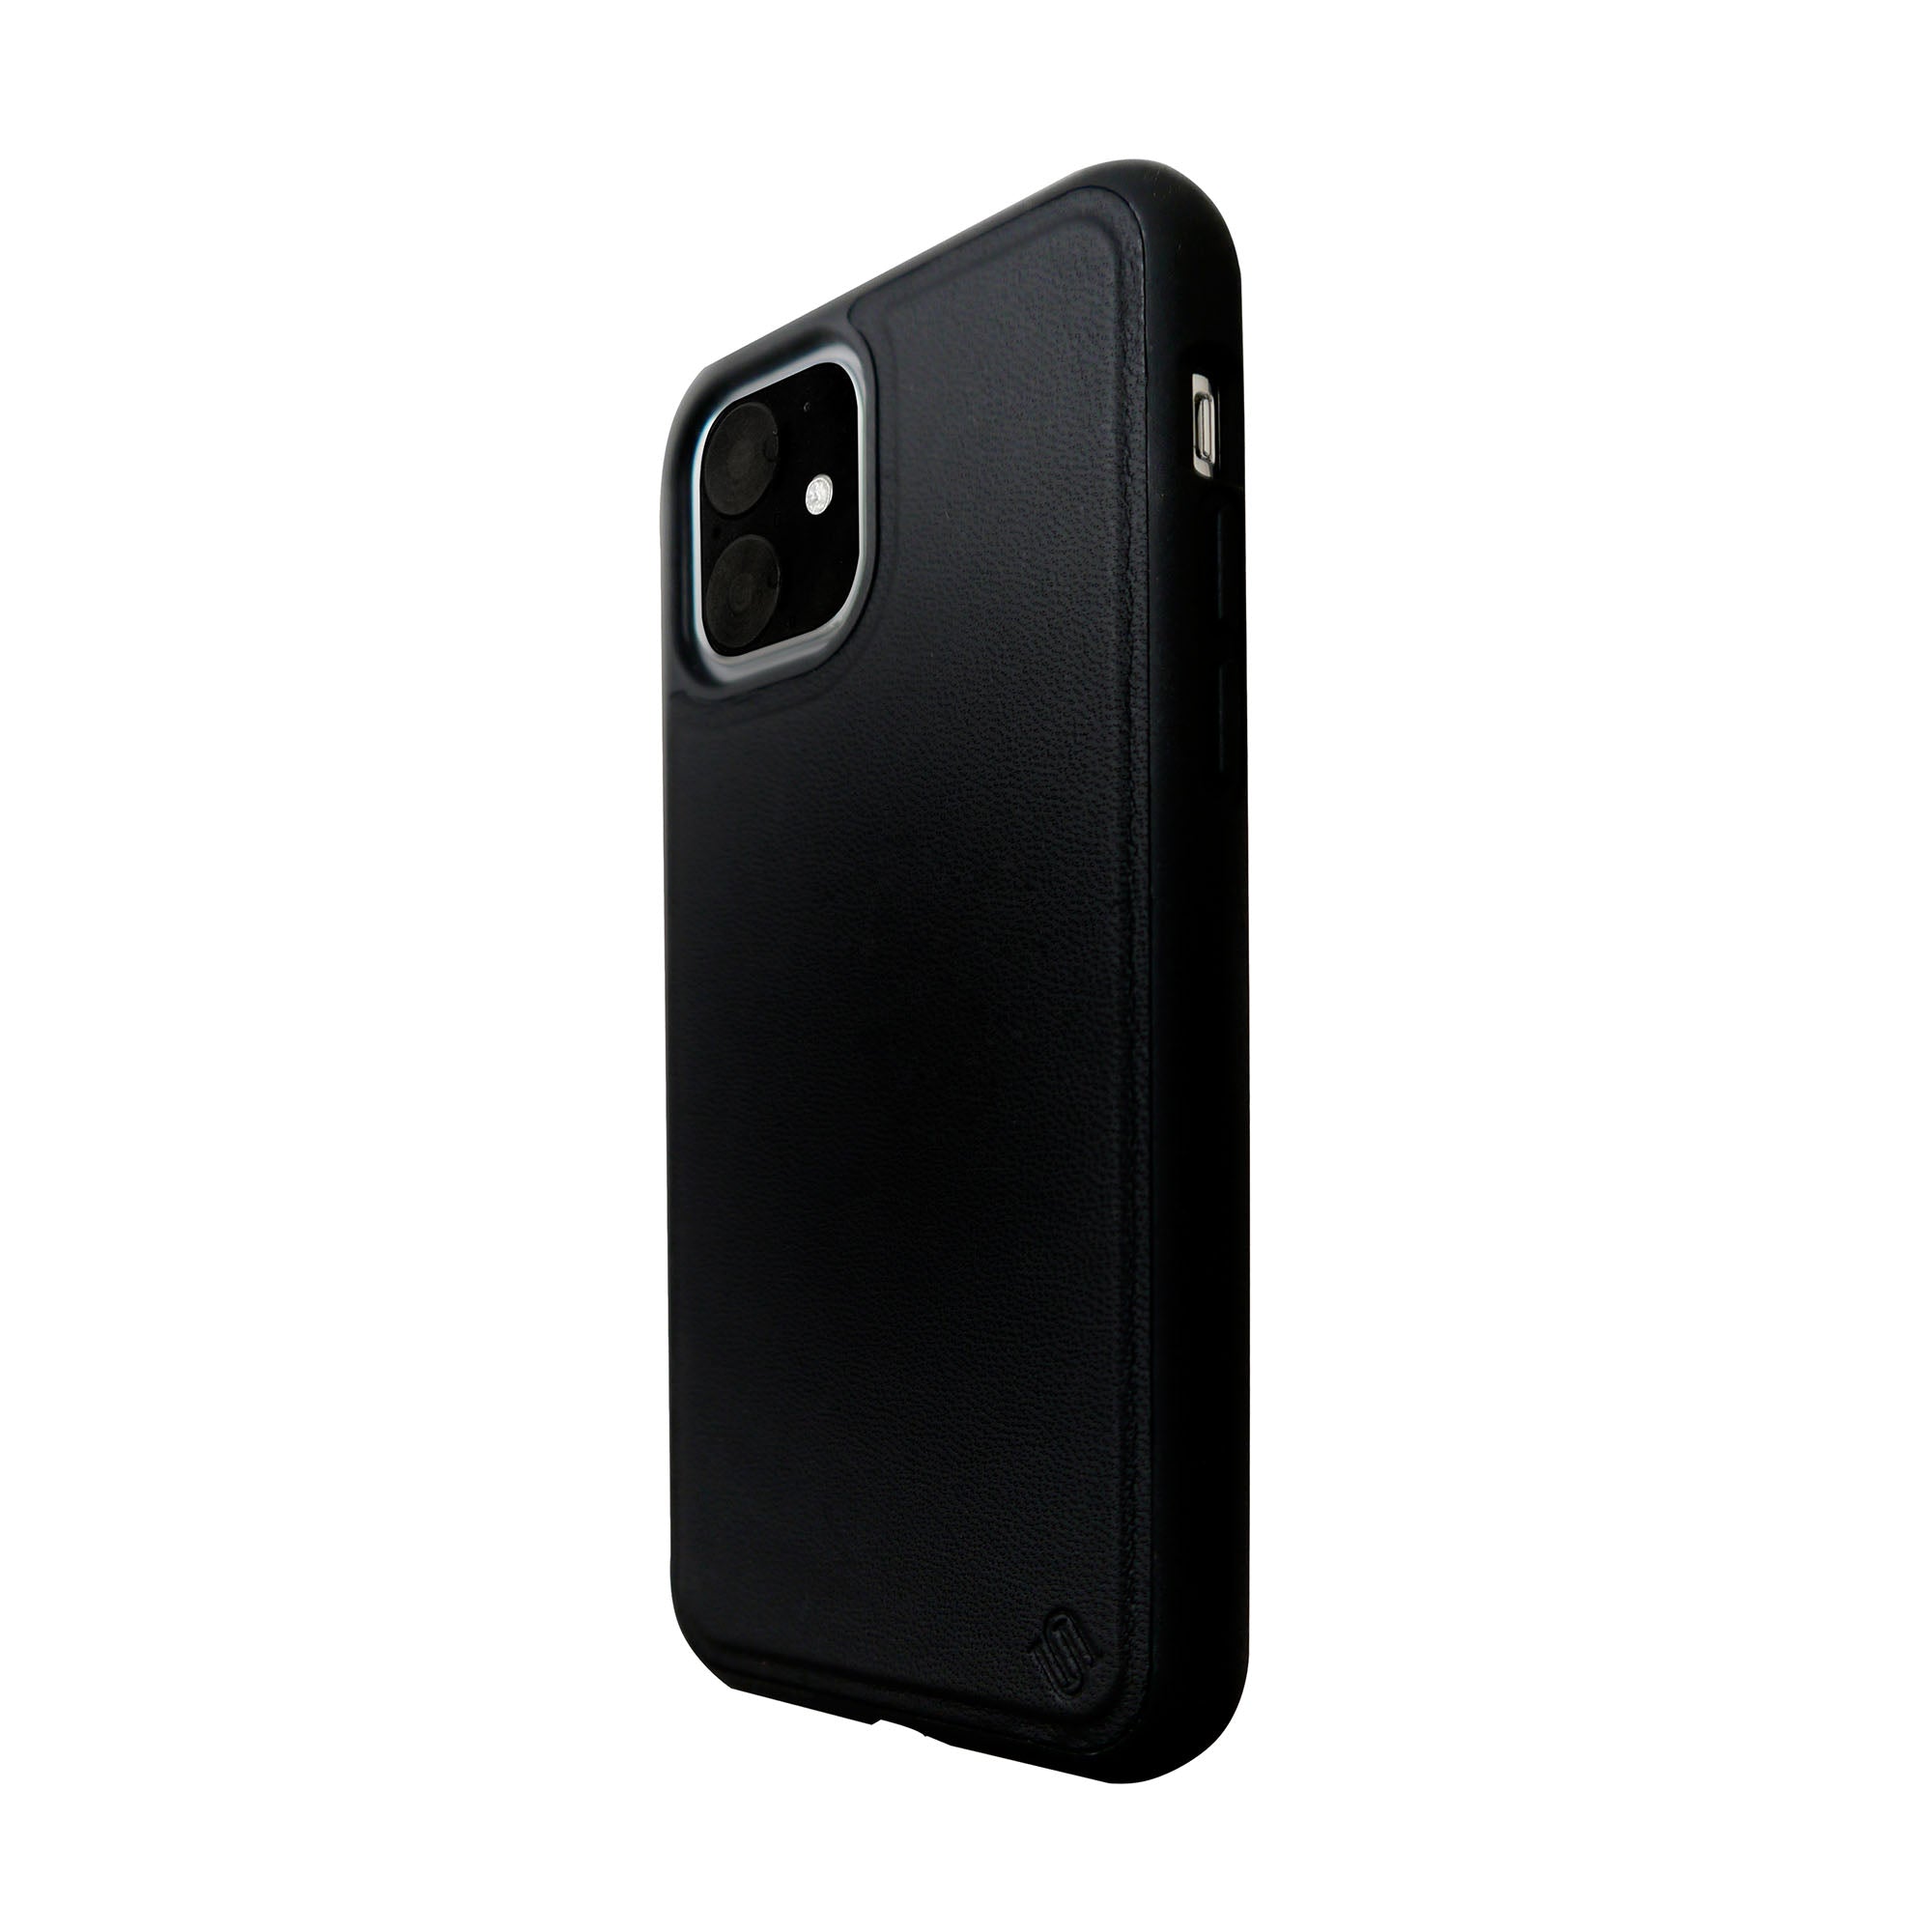 iPhone 11/XR Uunique Black (Black Olive) Nutrisiti Eco Leather Back Case - 15-05067